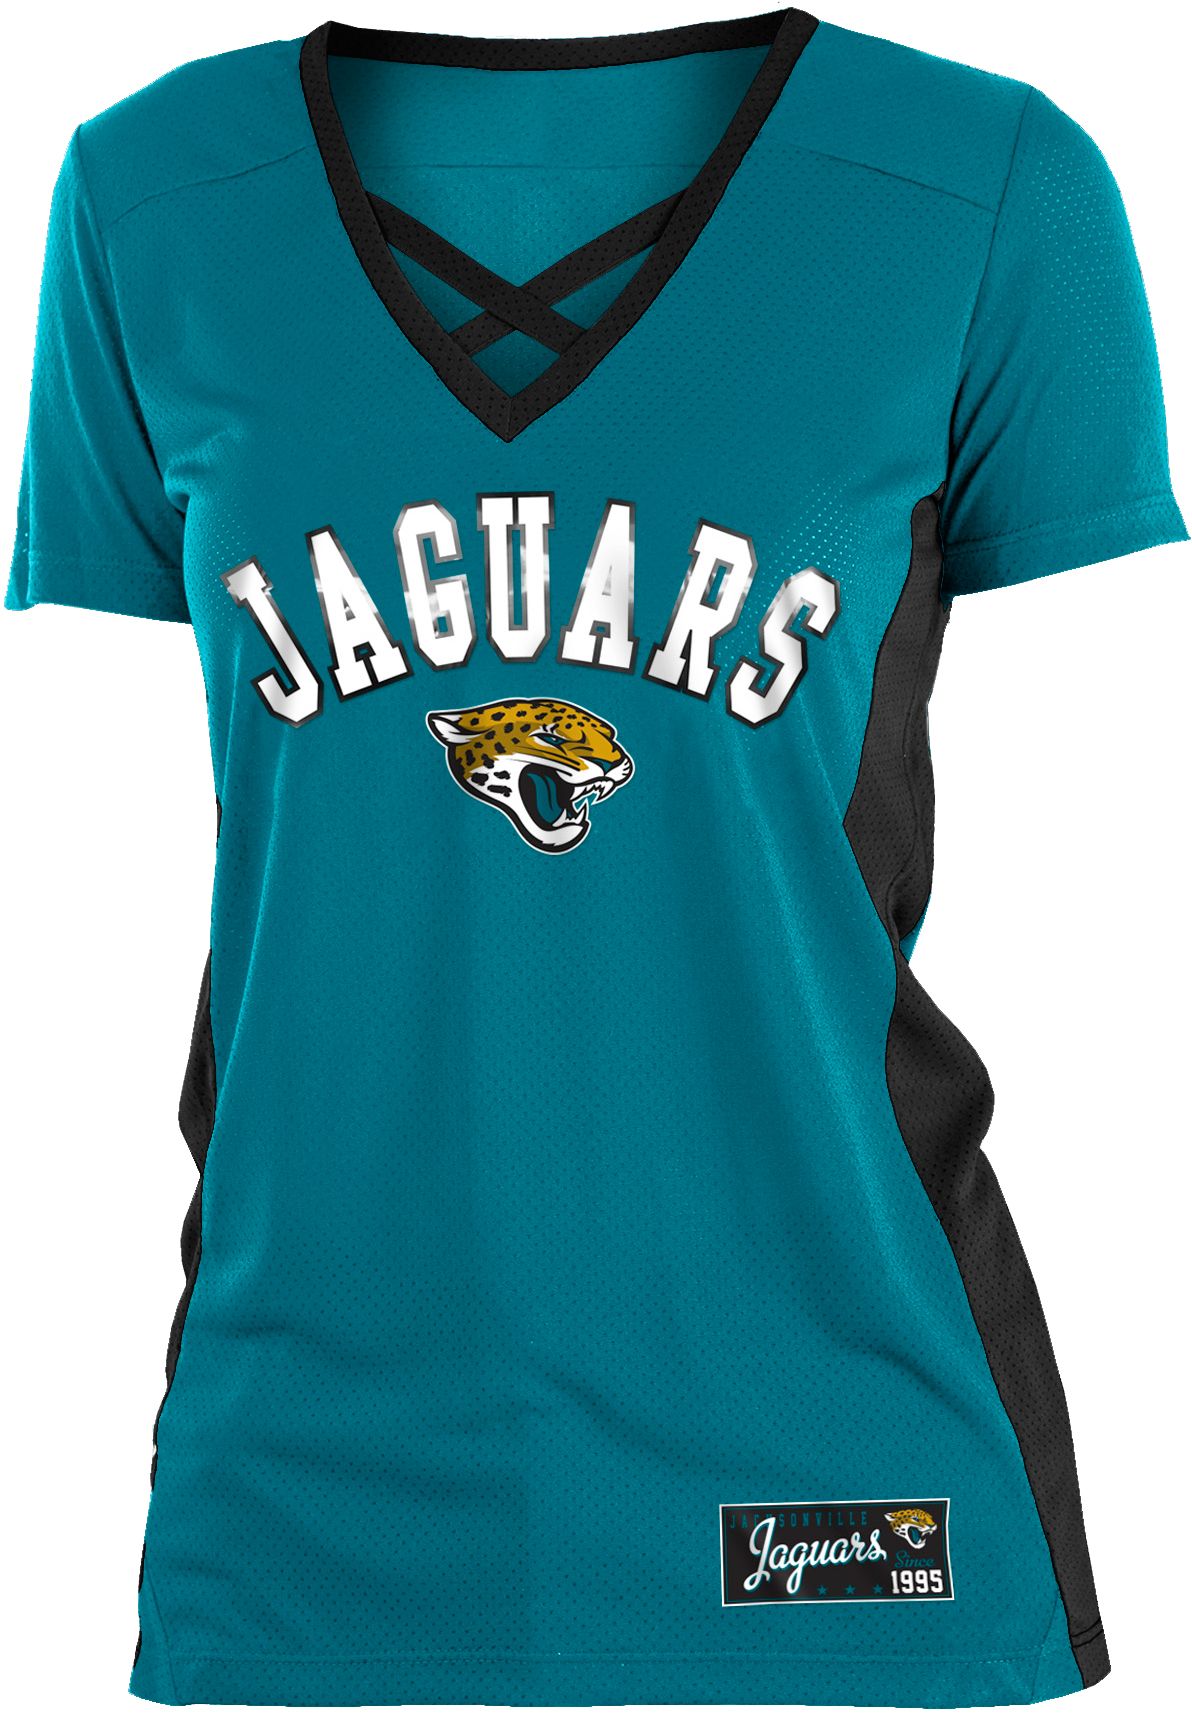 Jacksonville Jaguars Mesh X Teal 